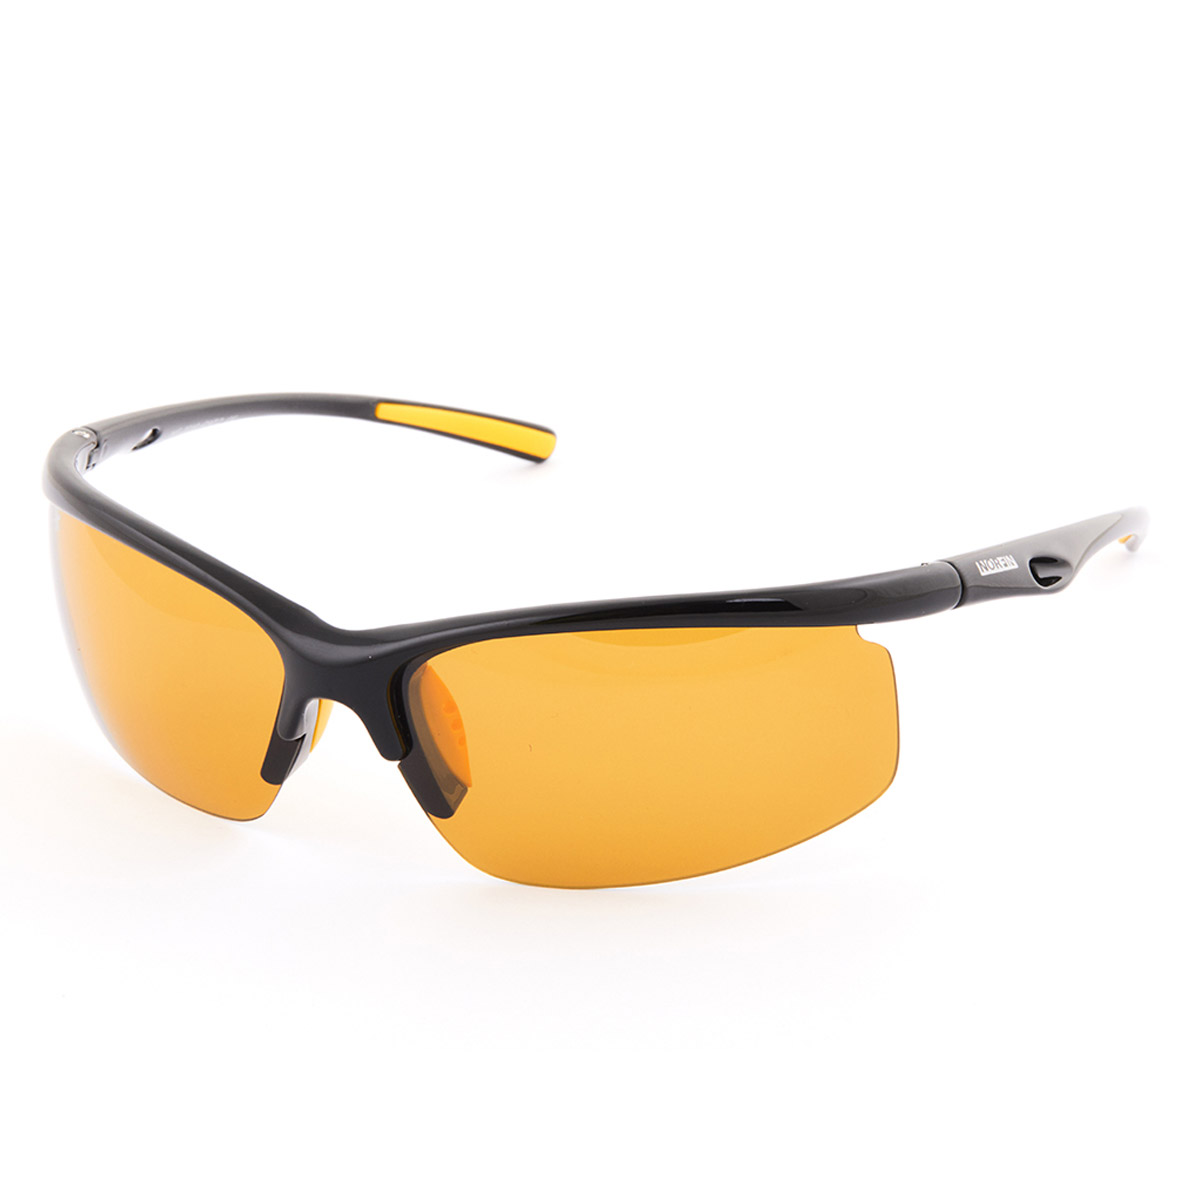 Norfin Polarized Sunglasses Yellow